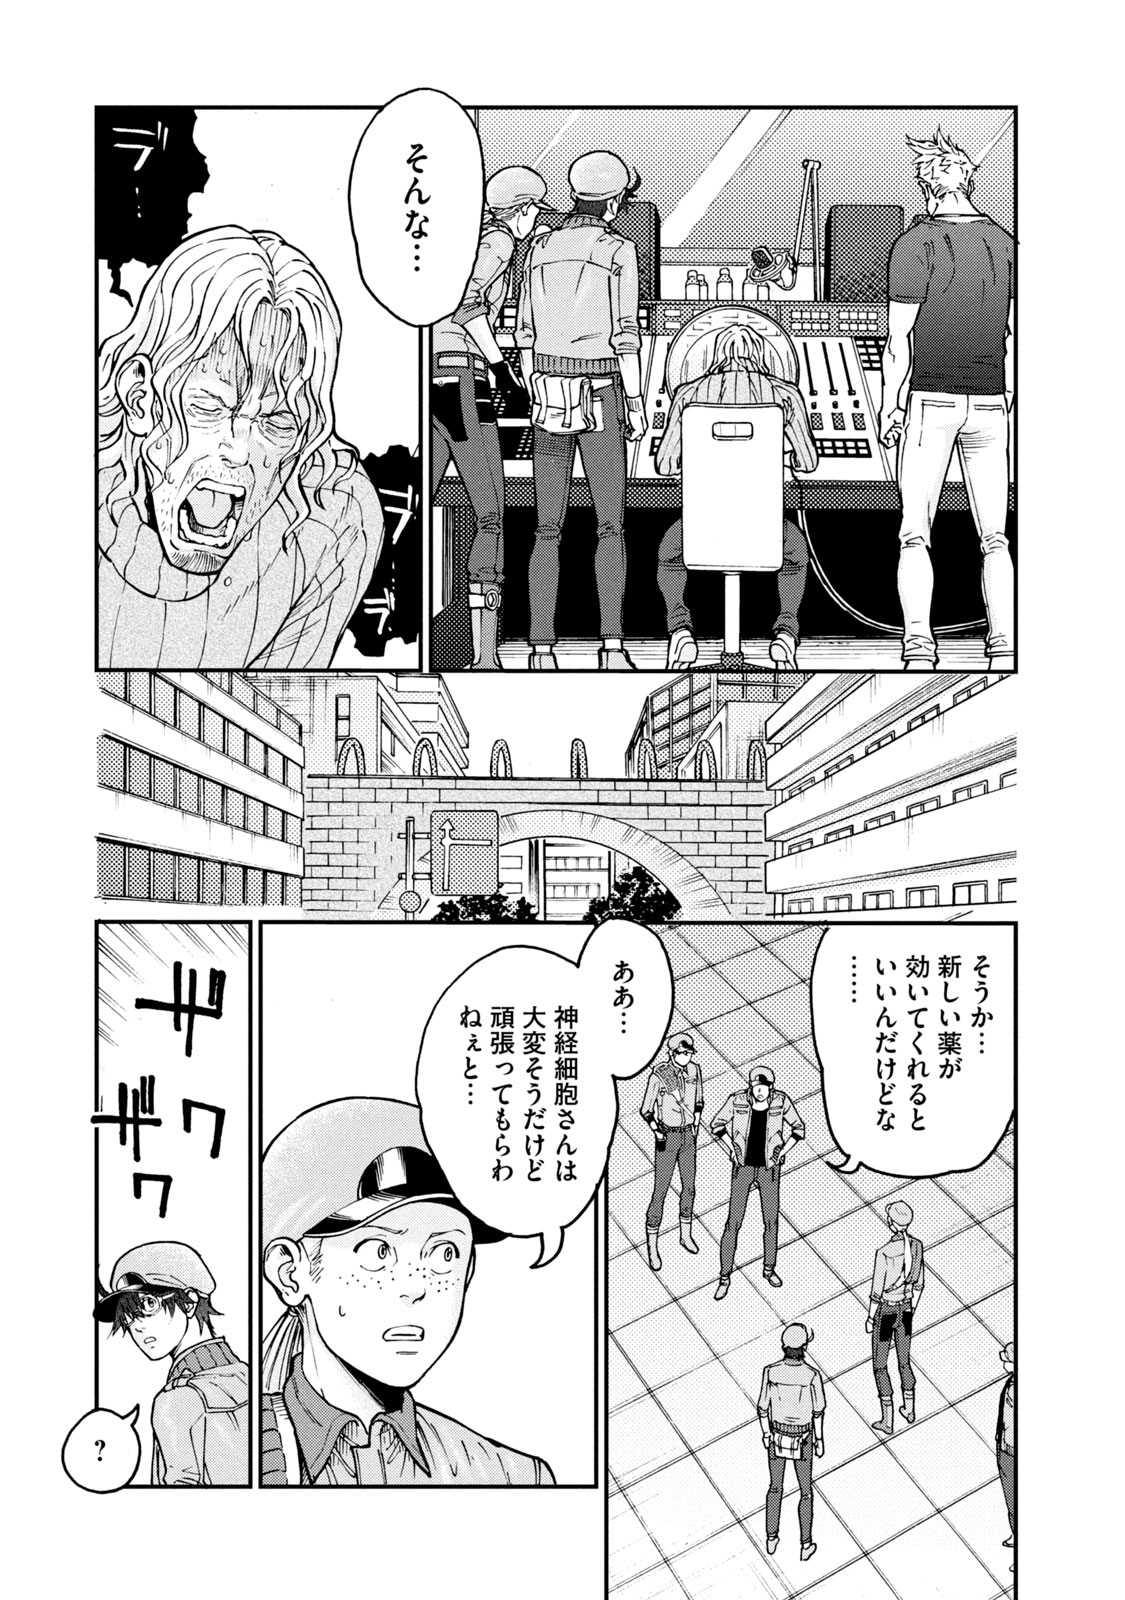 Hataraku Saibou BLACK - Chapter 35 - Page 13